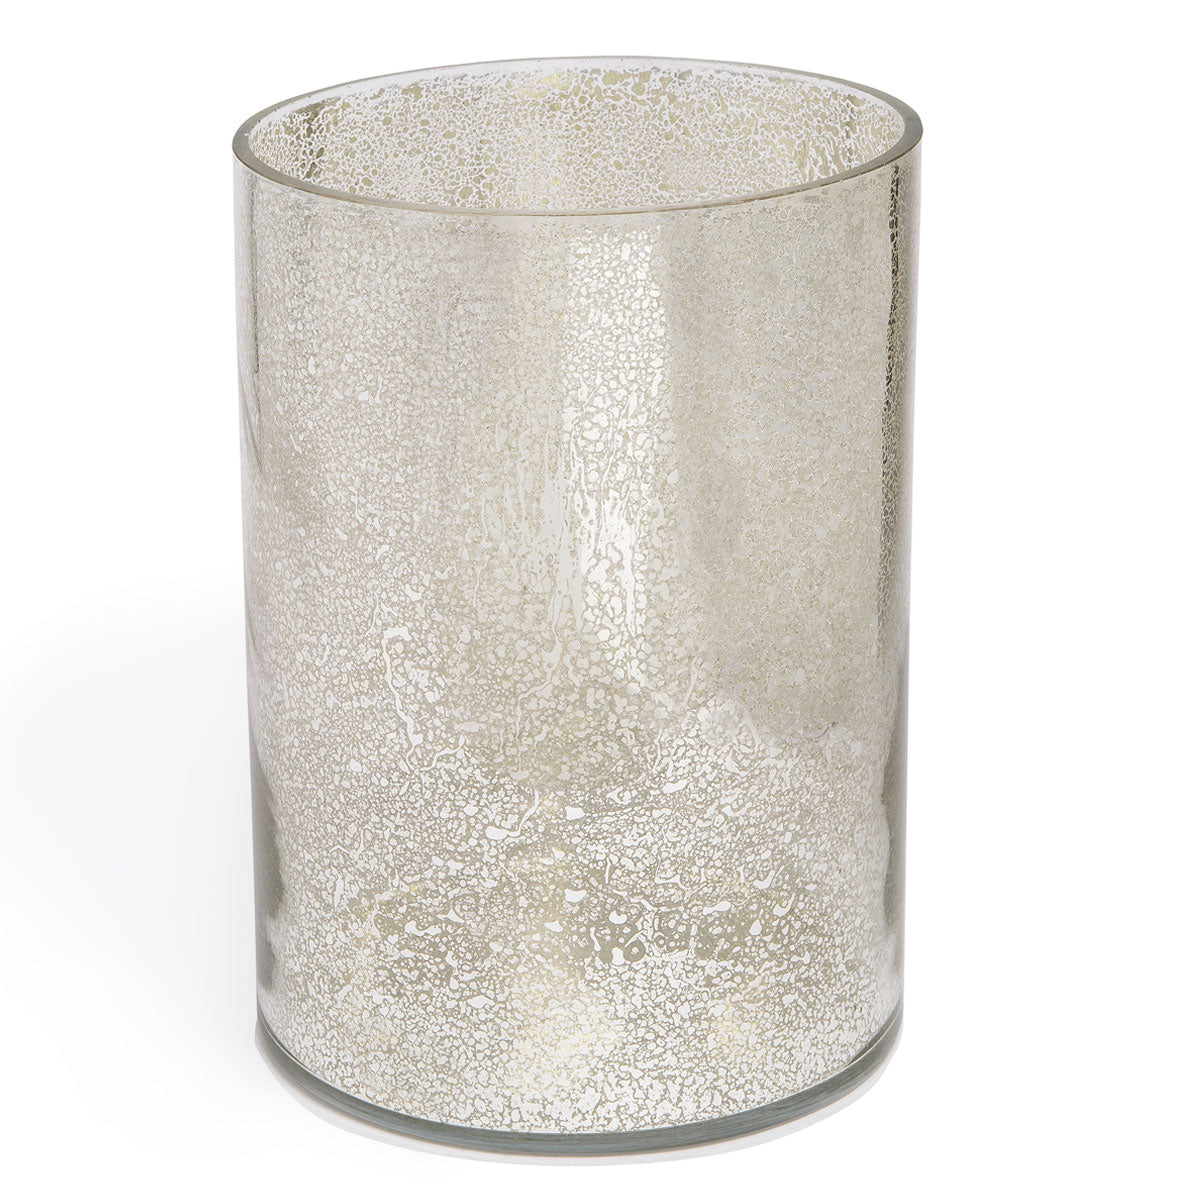 Glass (Vizcaya)|Waste Basket